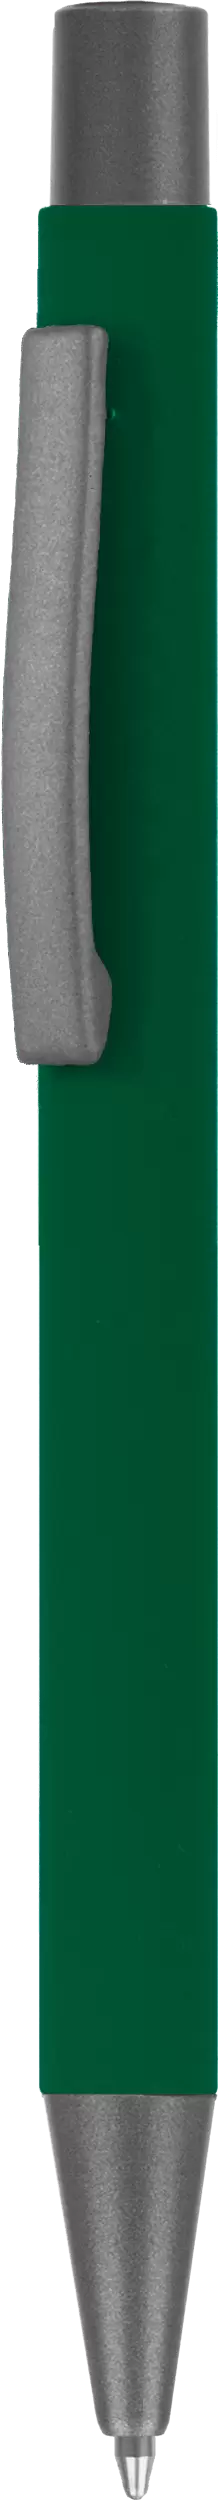 Ручка MAX SOFT TITAN Зеленая 1110.02